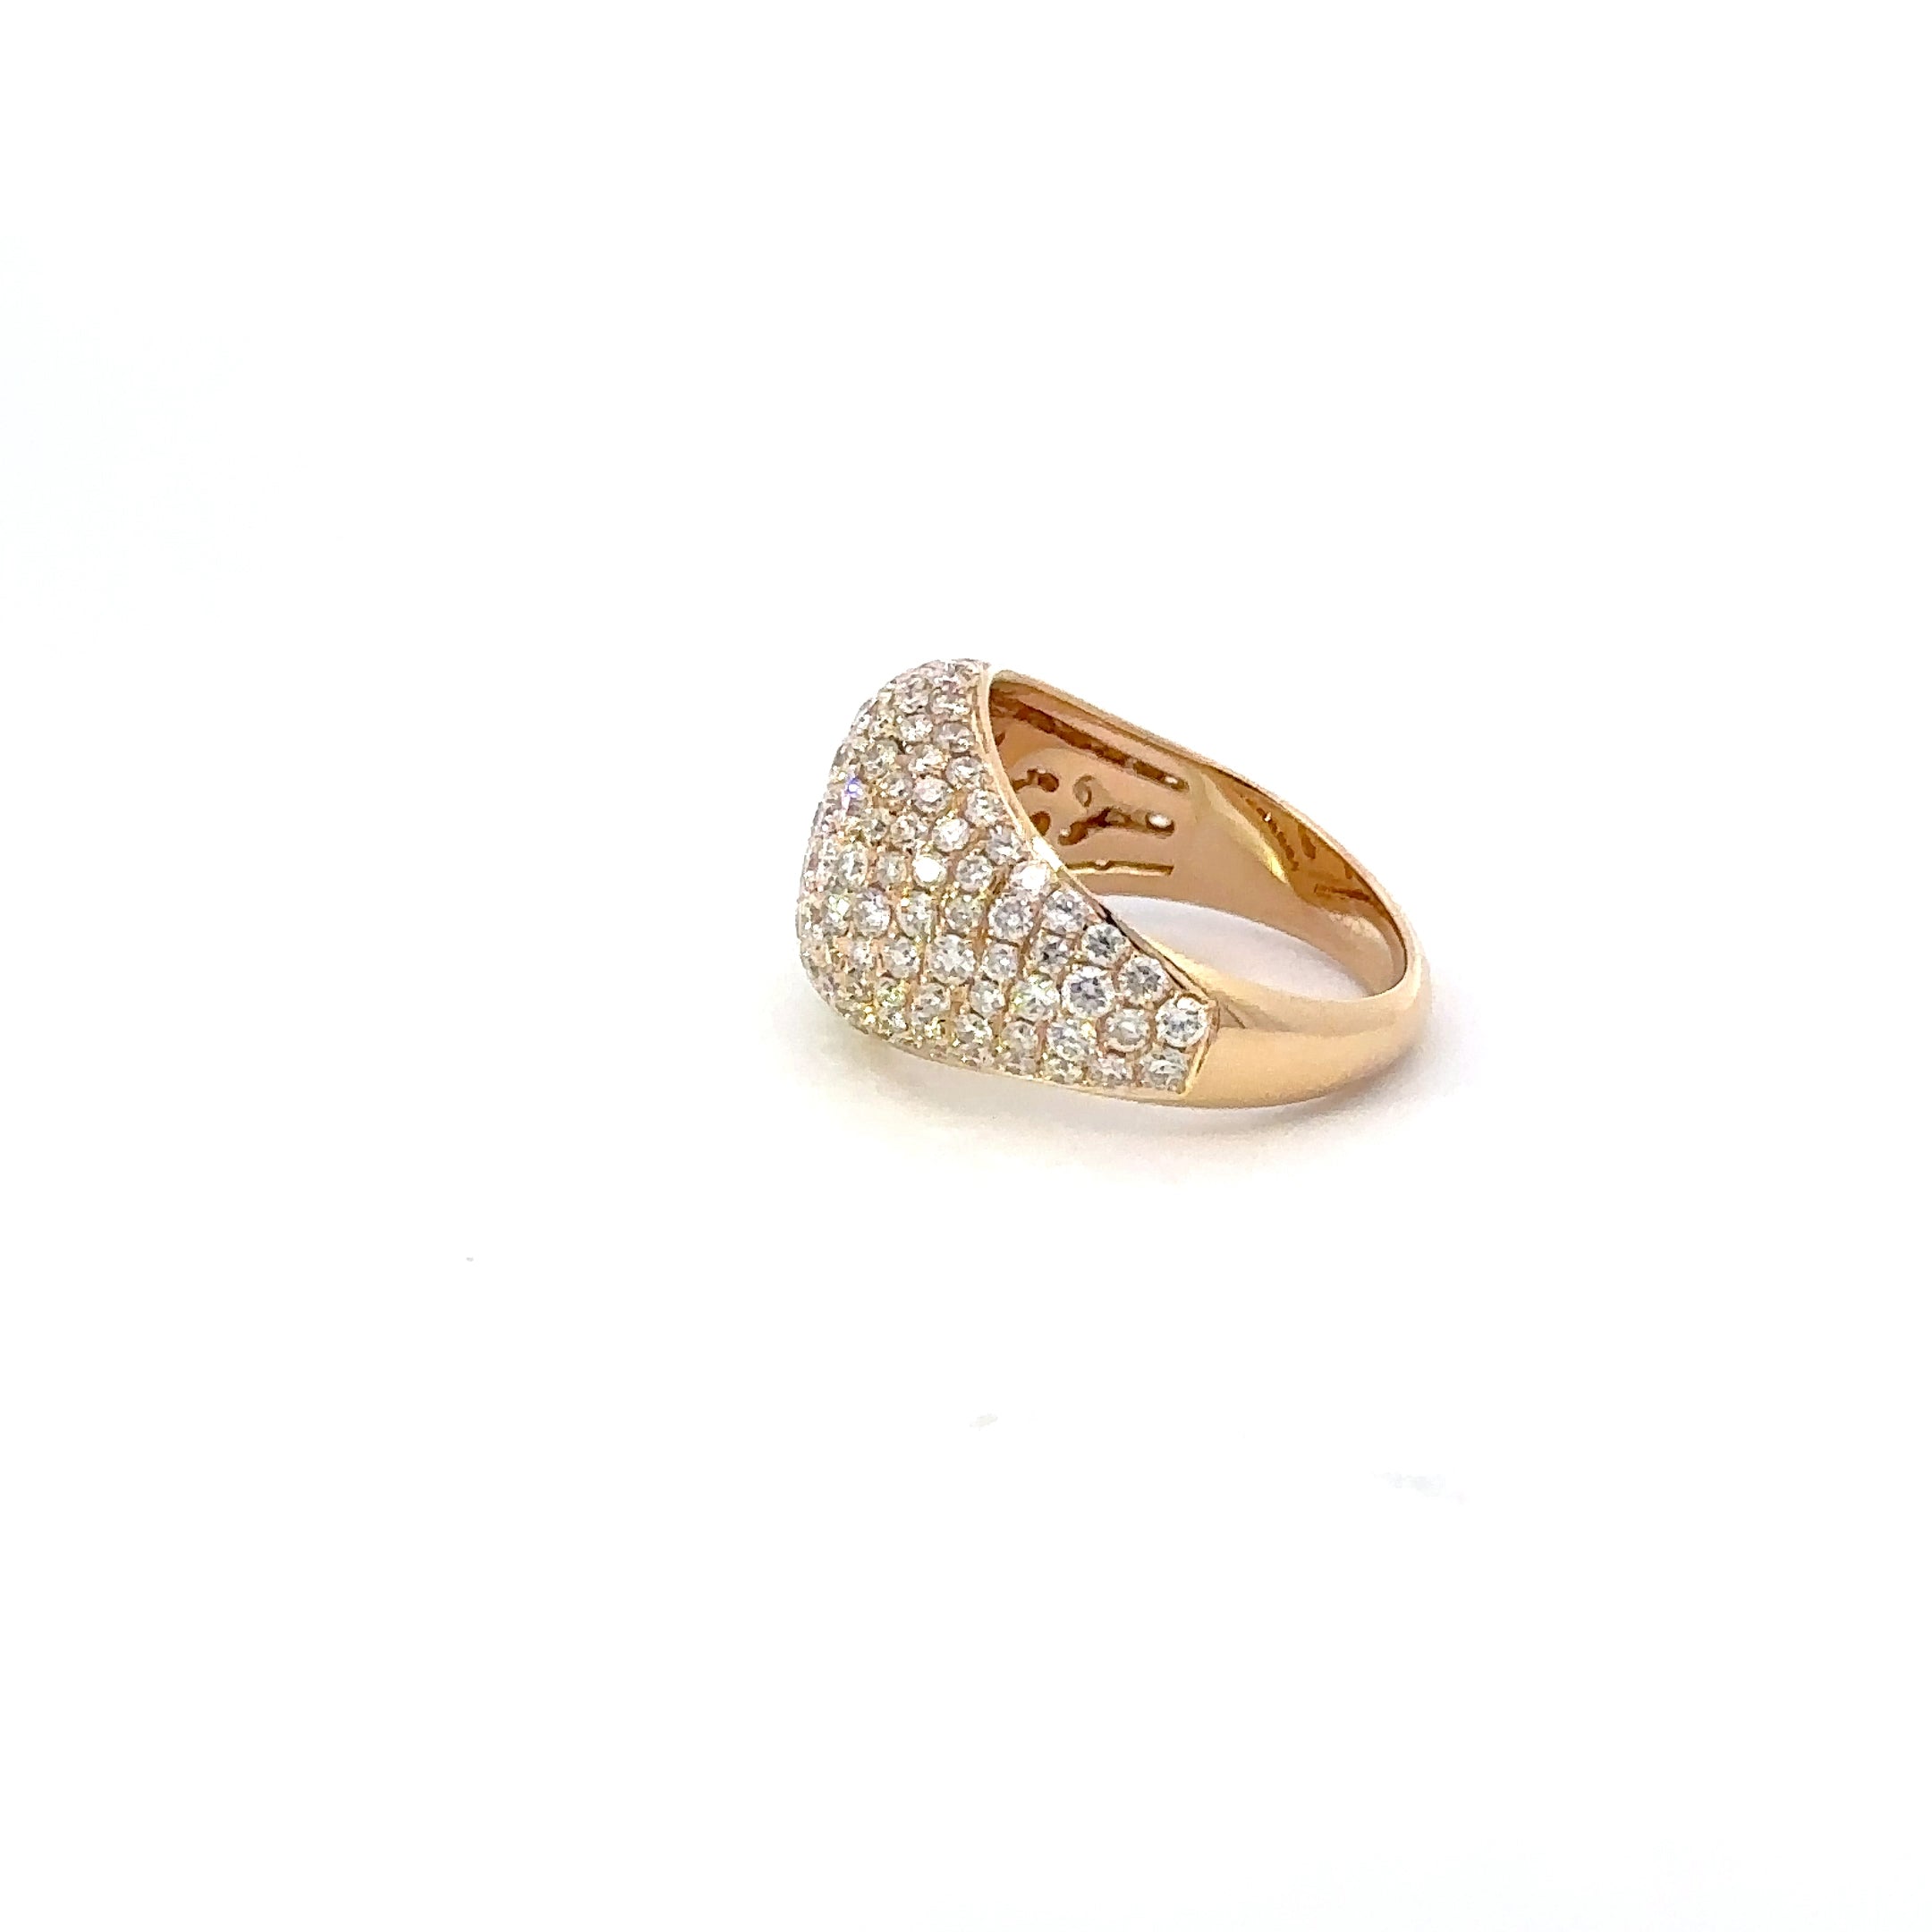 Sparkling Diamond Ring in 18k Yellow Gold